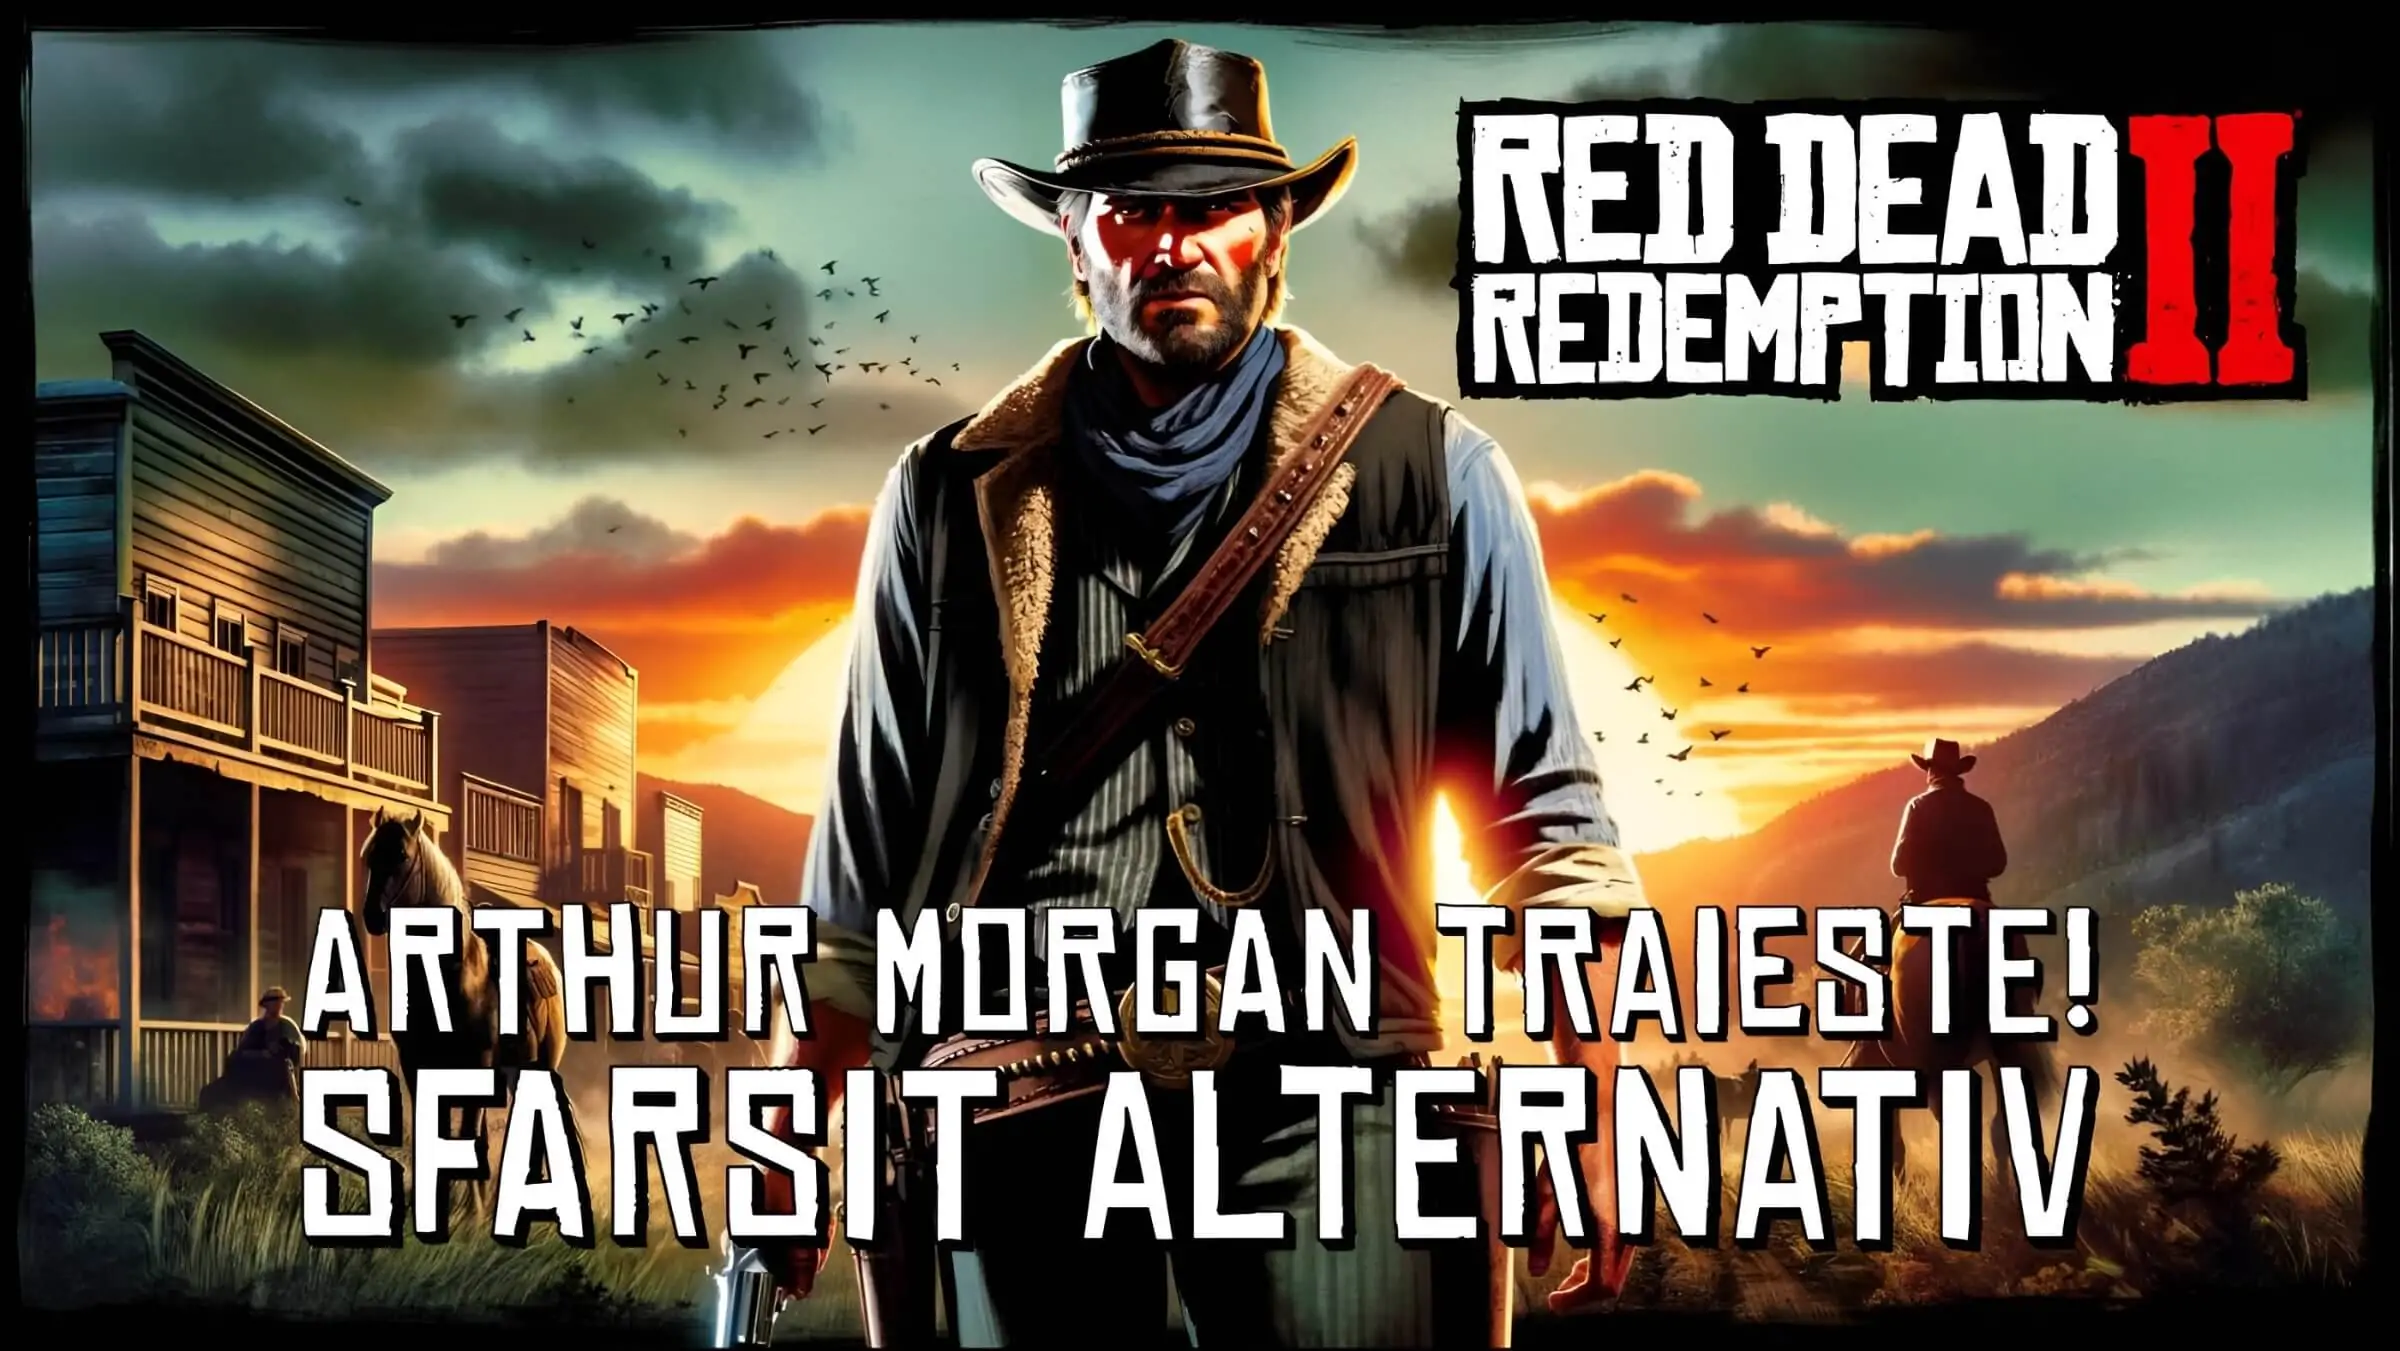 Arthur morgan in red dead redemption 2